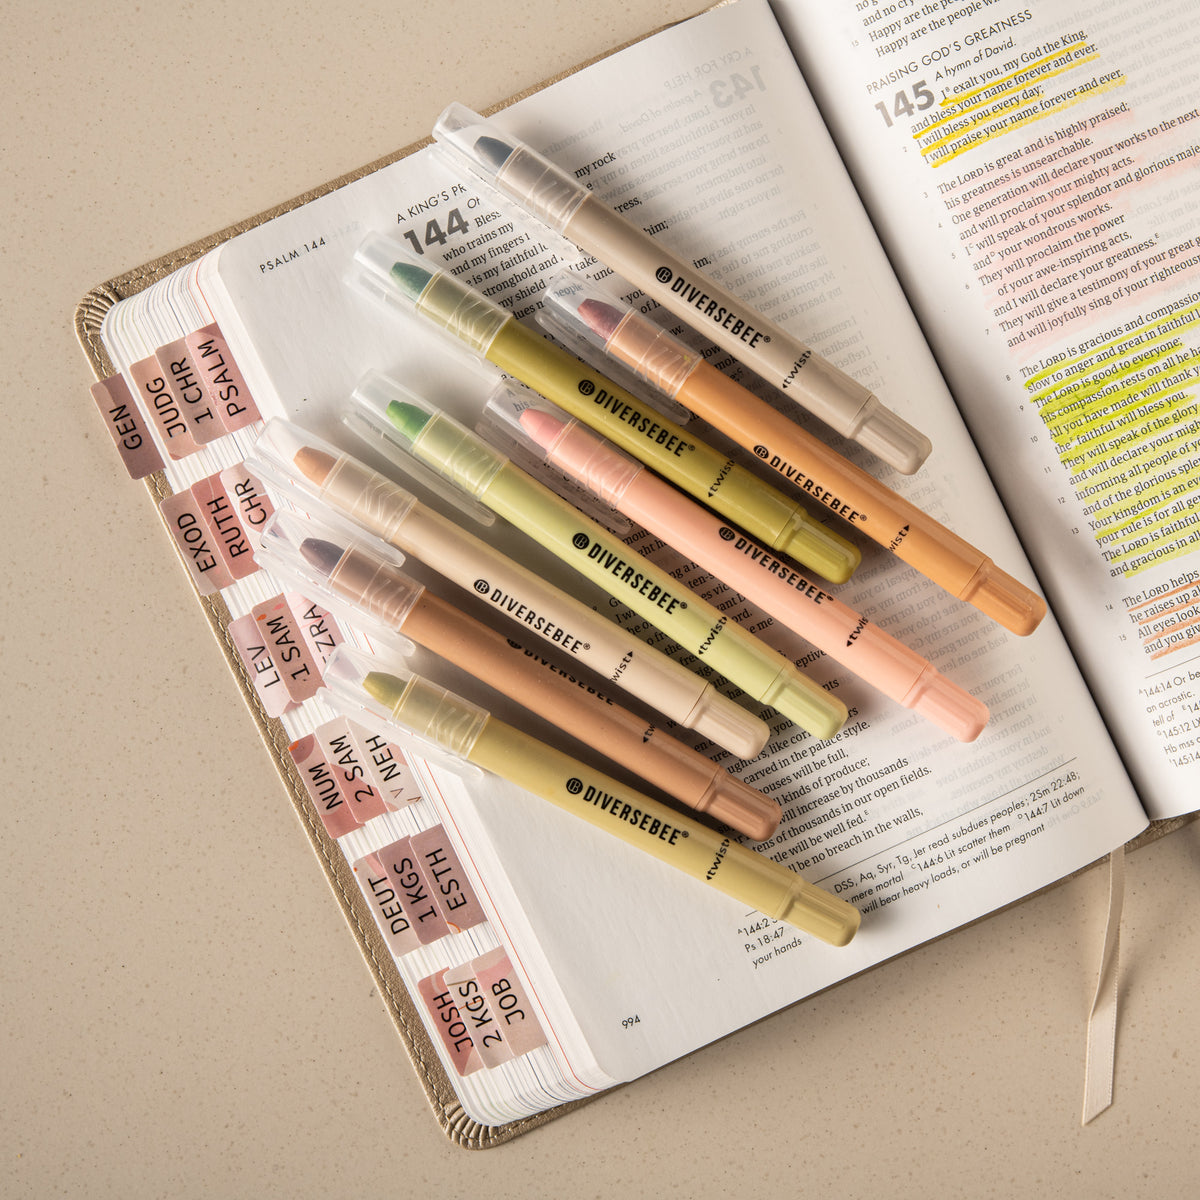 Mr. Pen- Bible Pens, 10 Pack, Assorted Color Pens, Bible Pens No Bleed  Through, Bible Journaling Pens, No Bleed Pens, Bible Journaling Supplies,  Non-Bleed Fine Point Pens, Colorful Bible Pen 